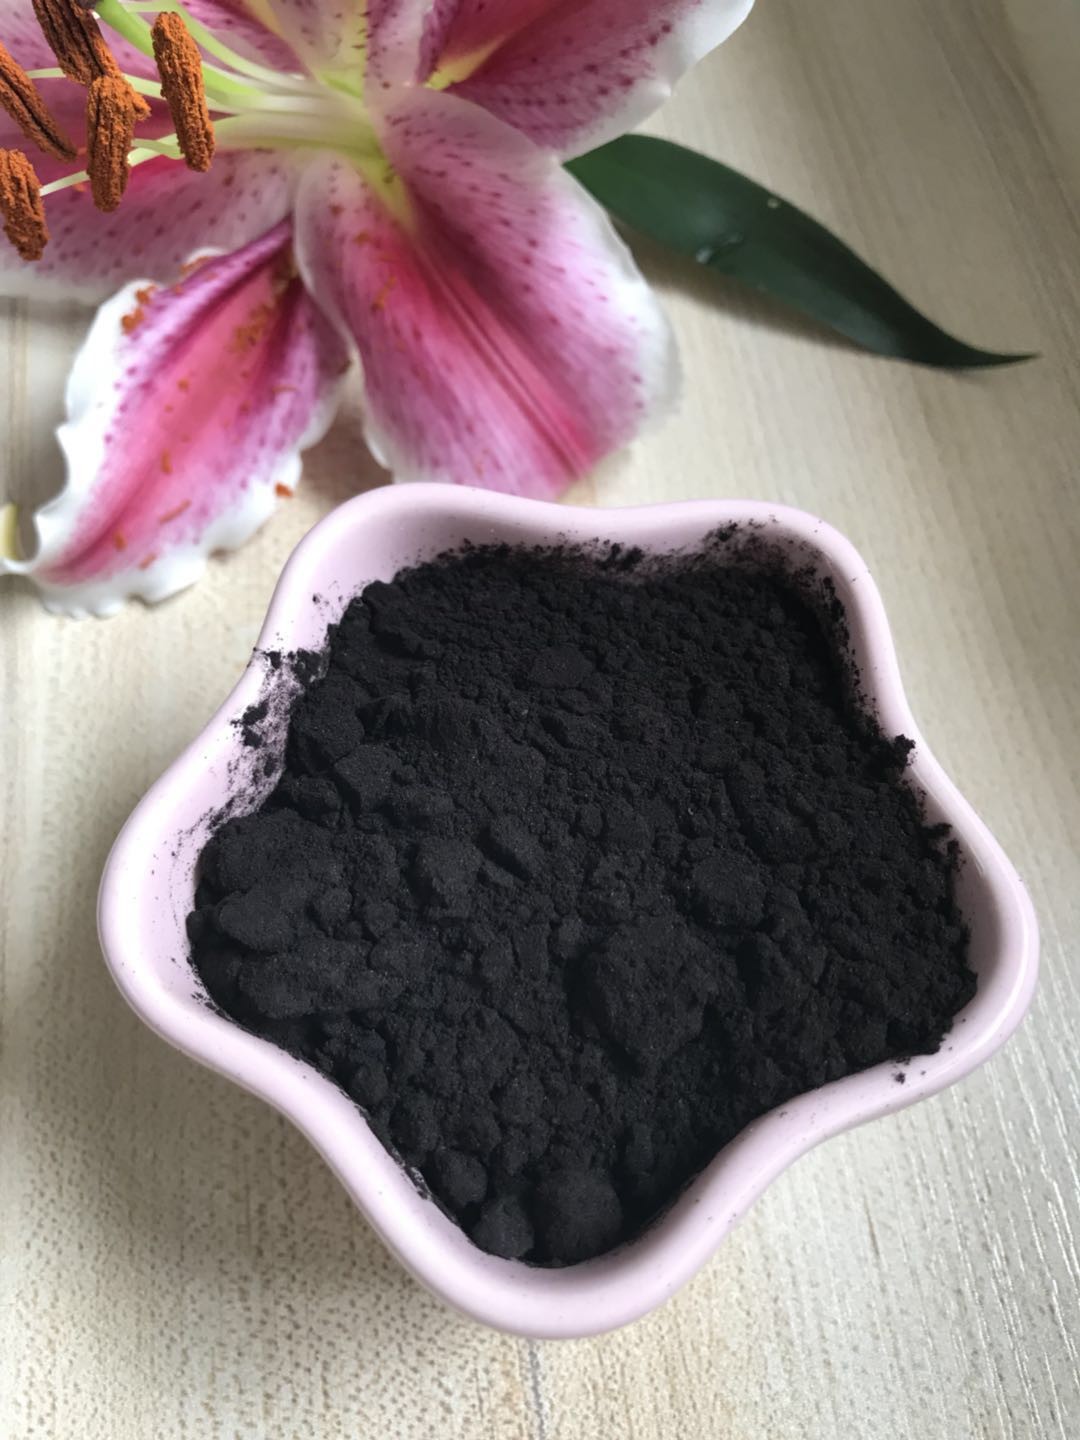 Quality Black 100 Pure Cocoa Powder 10%- 12% Fat Content , 200cfu/G Max Mould Count for sale